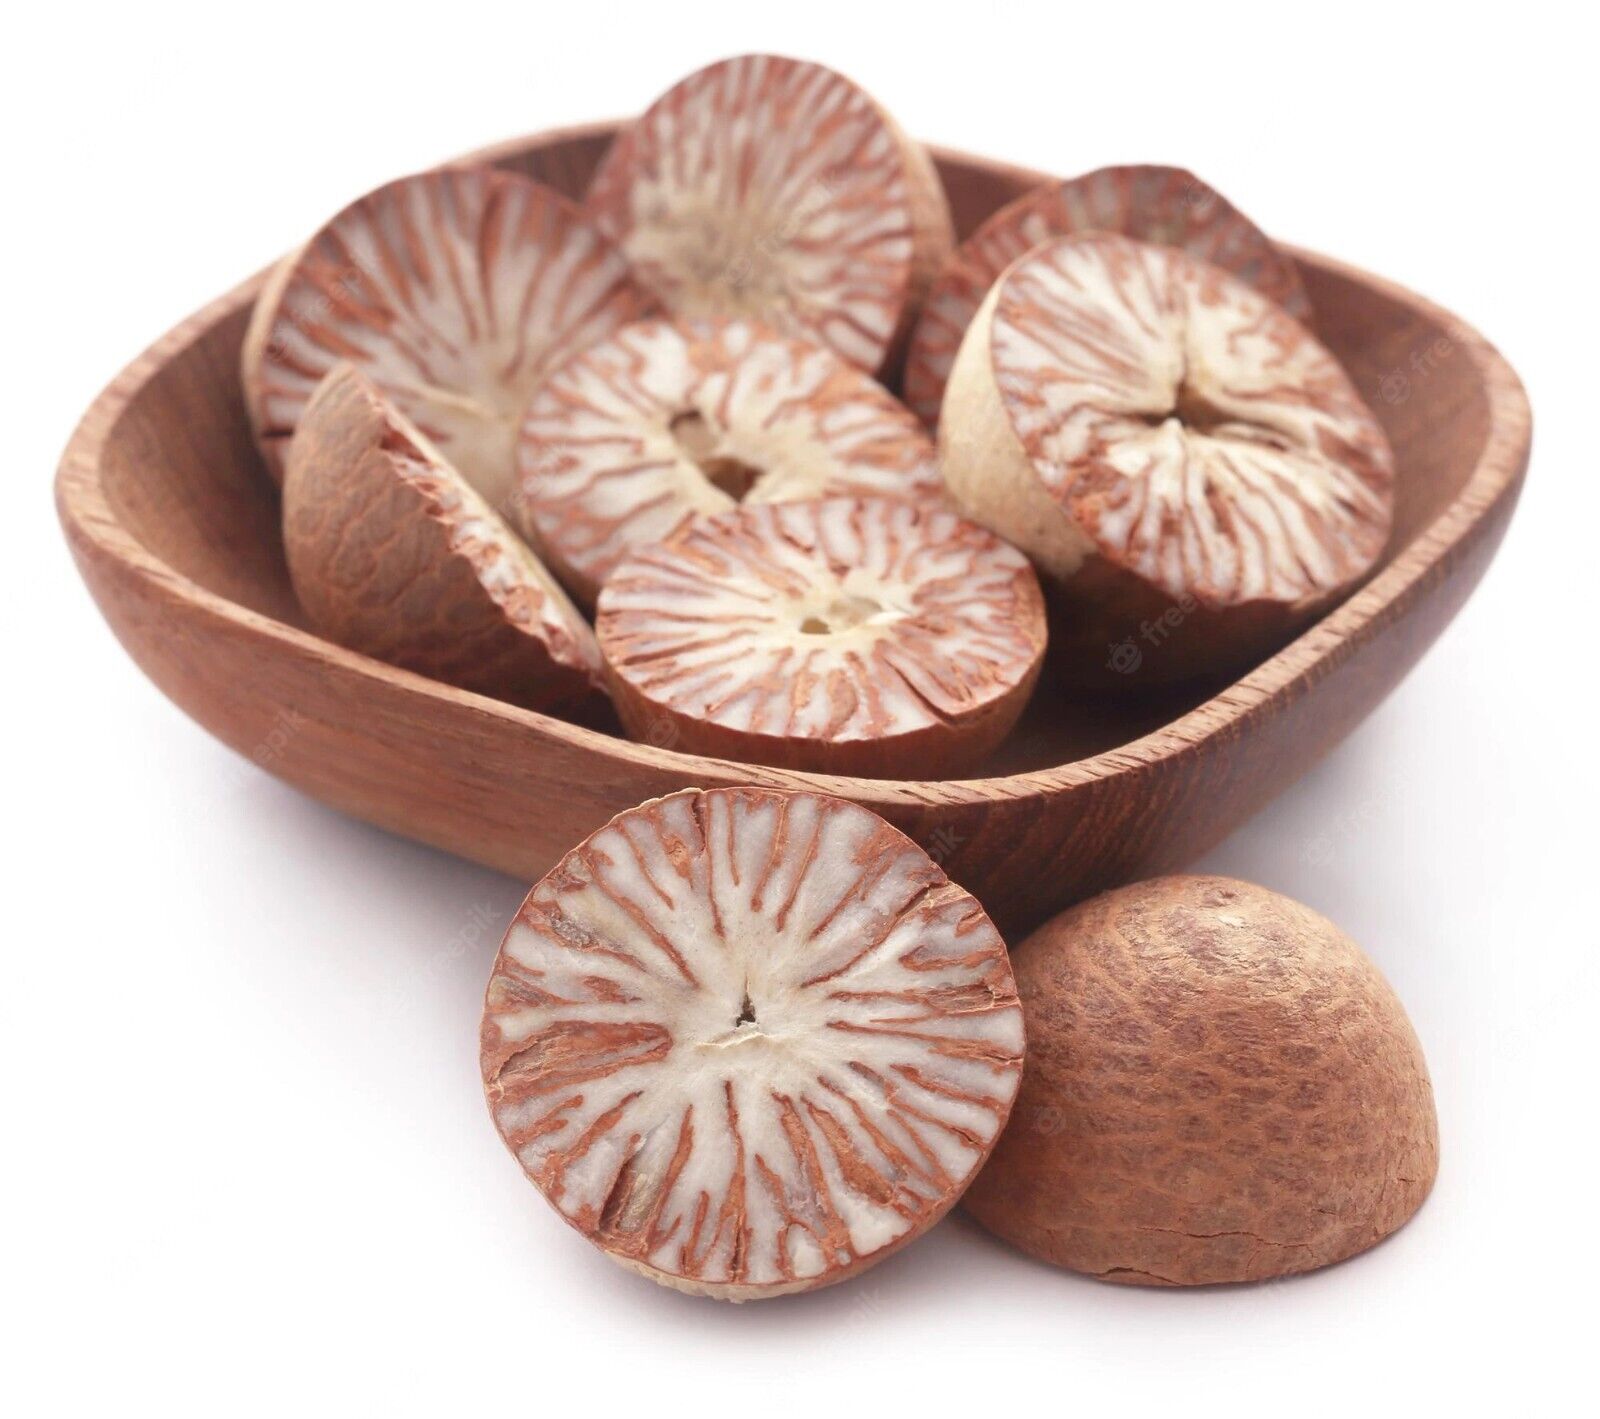 Areca Nut Whole Organic Dried Catechu 100% garden Fresh - Ceylon Betel Nuts 1kg